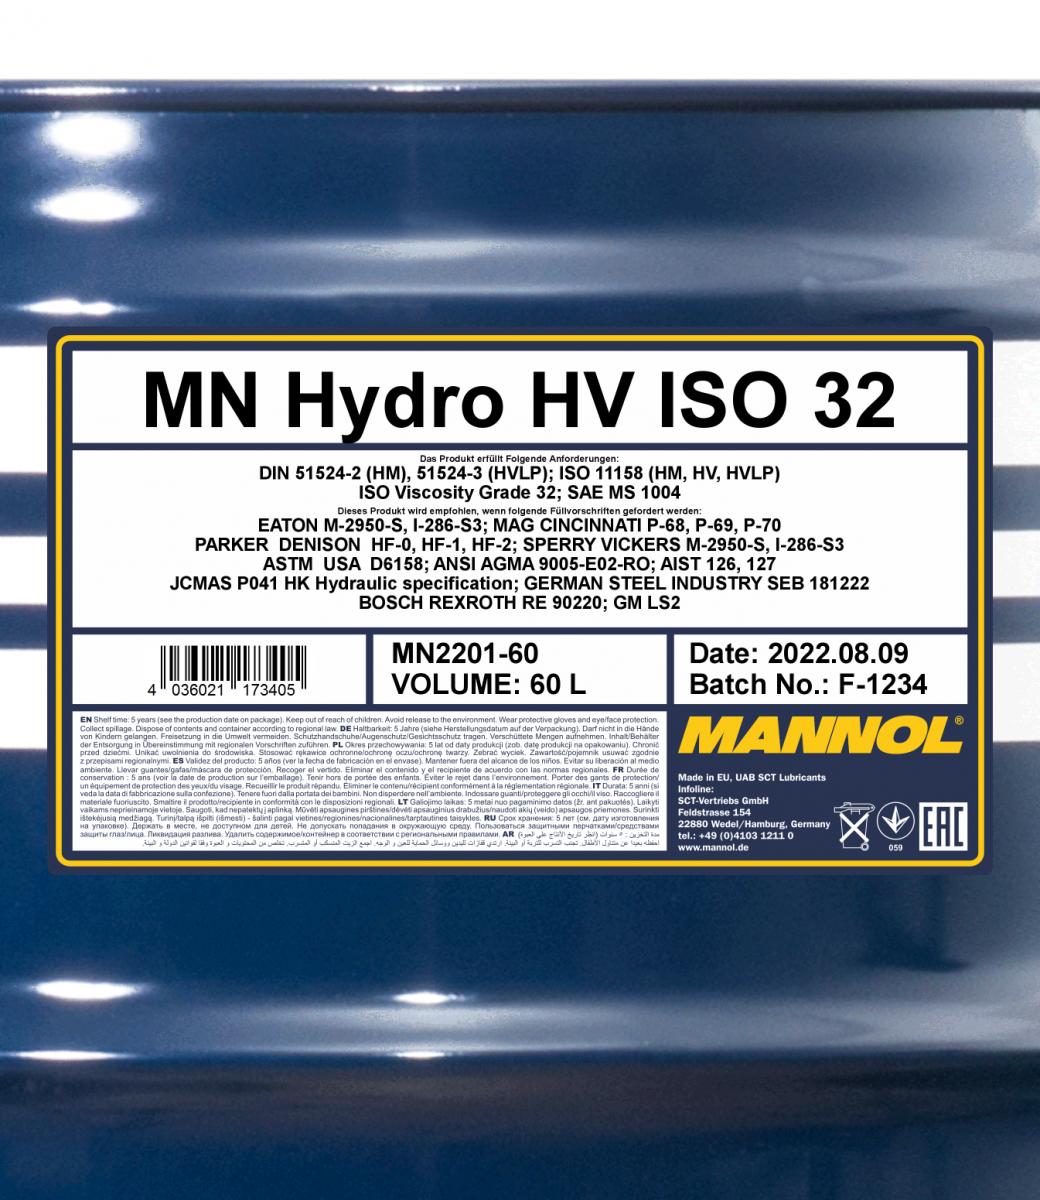 MN Hydro HV ISO 32